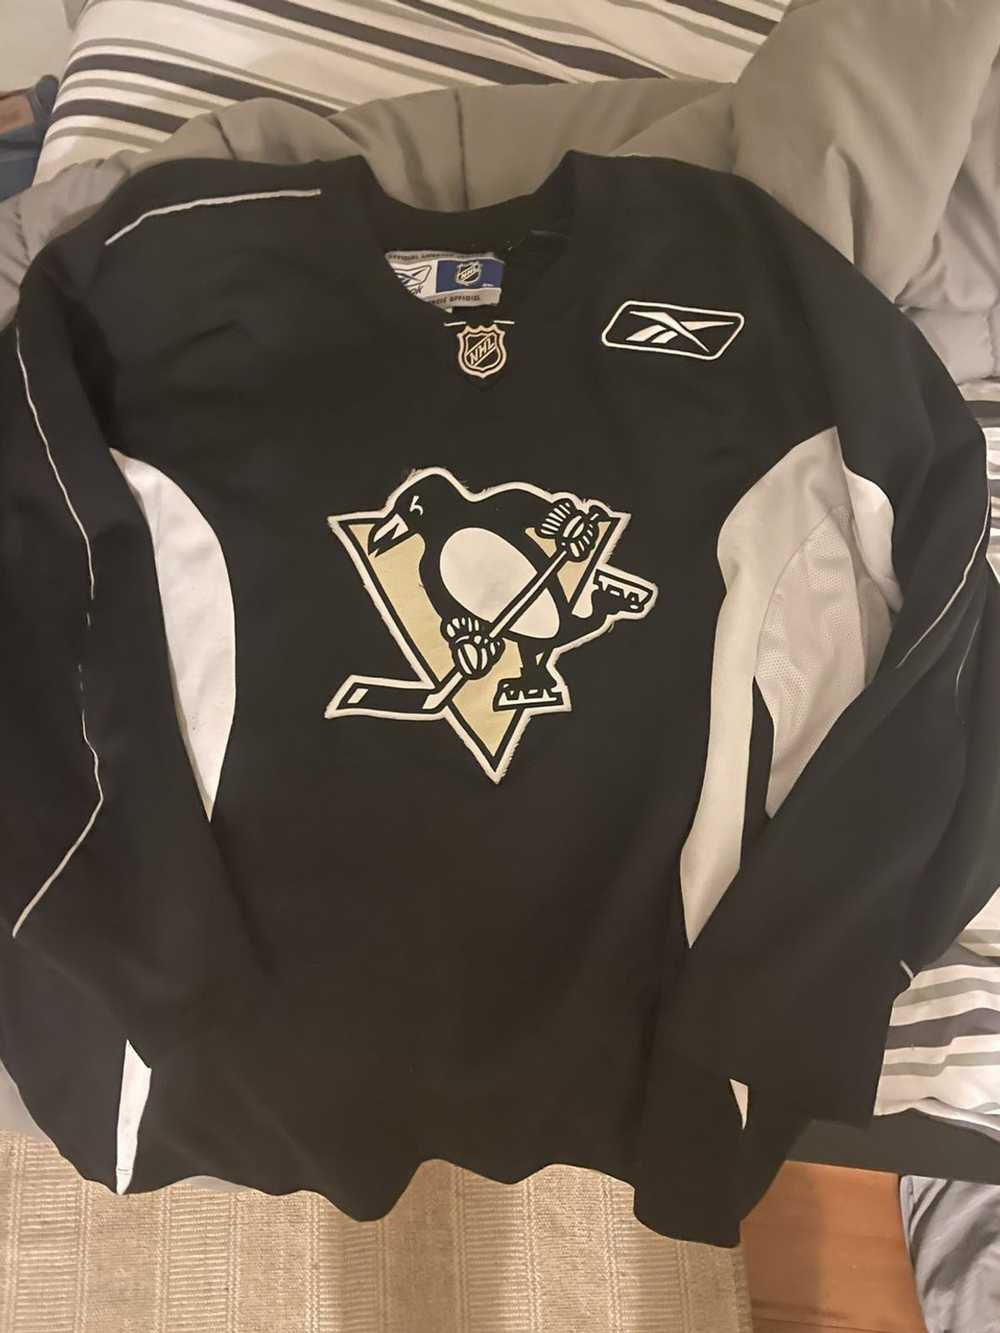 NHL Pittsburgh Penguins Evgeni Malkin #71 Reebok Hockey Jersey